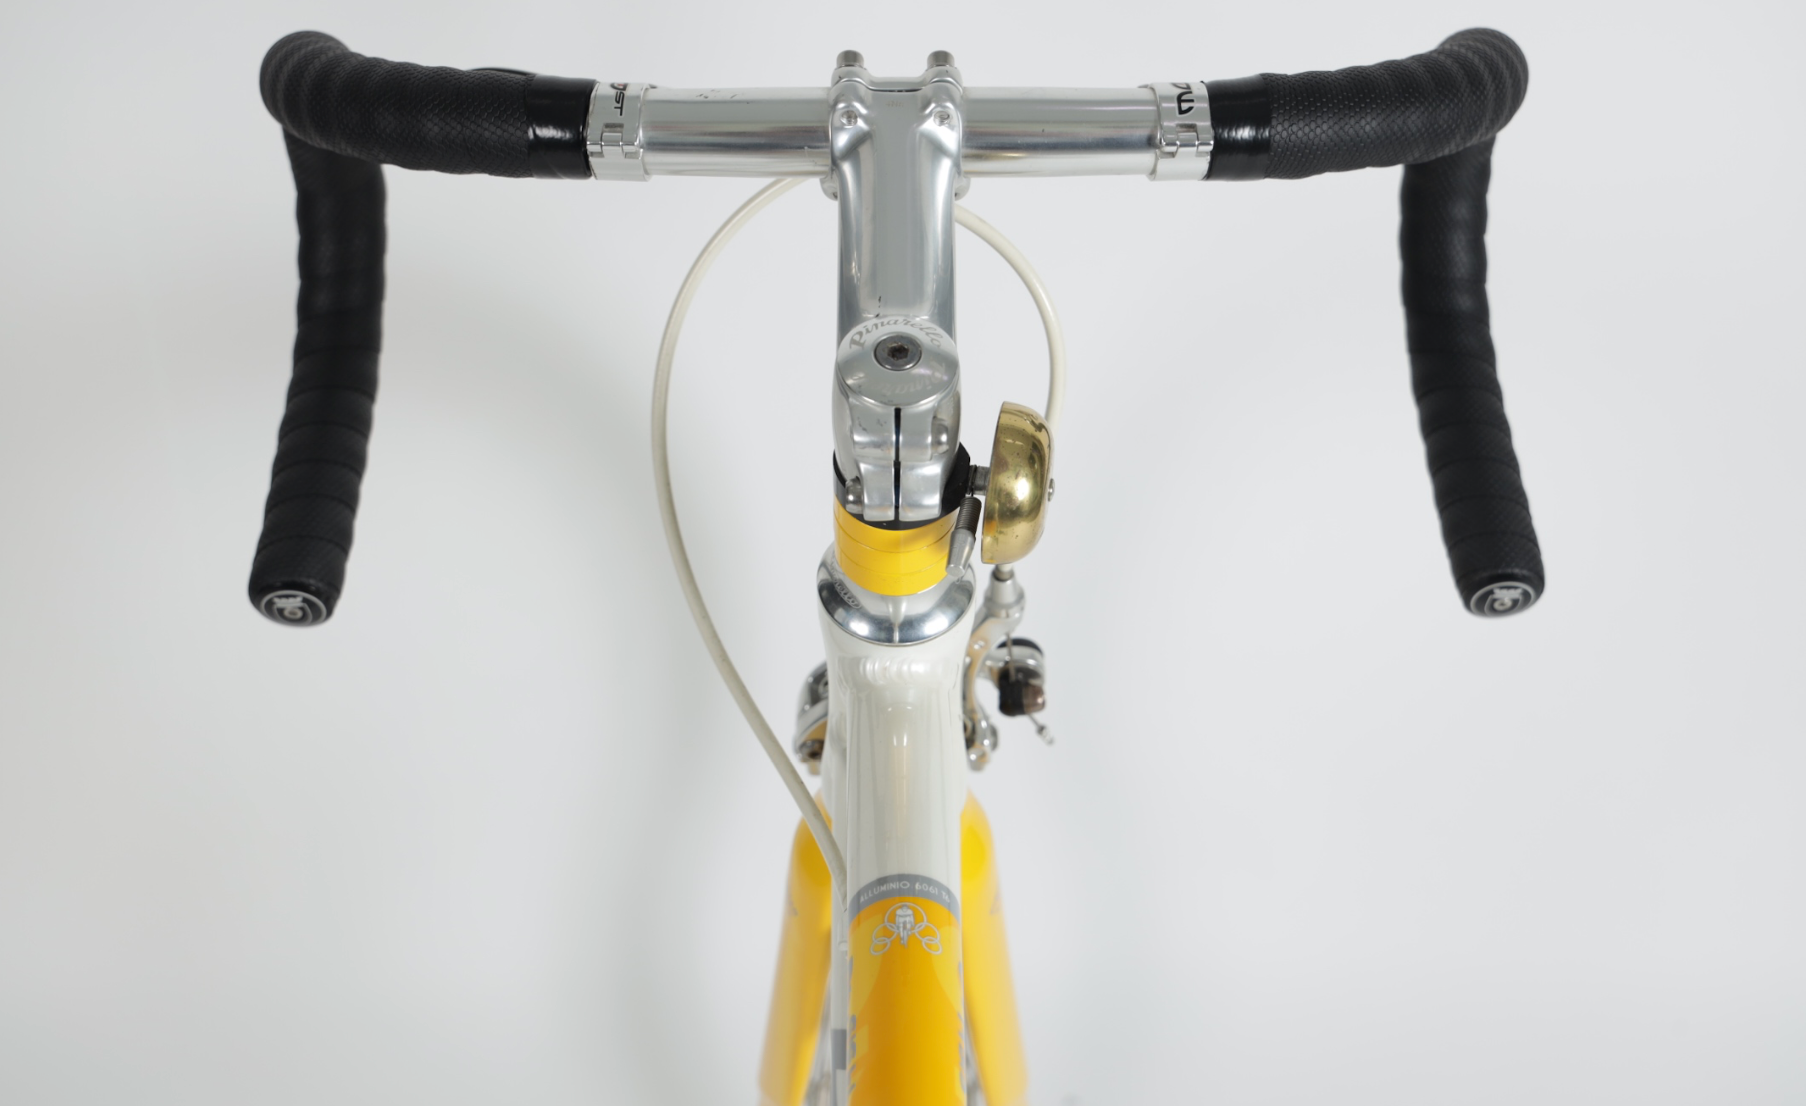 2015 Pinarello LUNGAVITA Single Speed Bicycle - 795-GLORY - PRE-OWNED